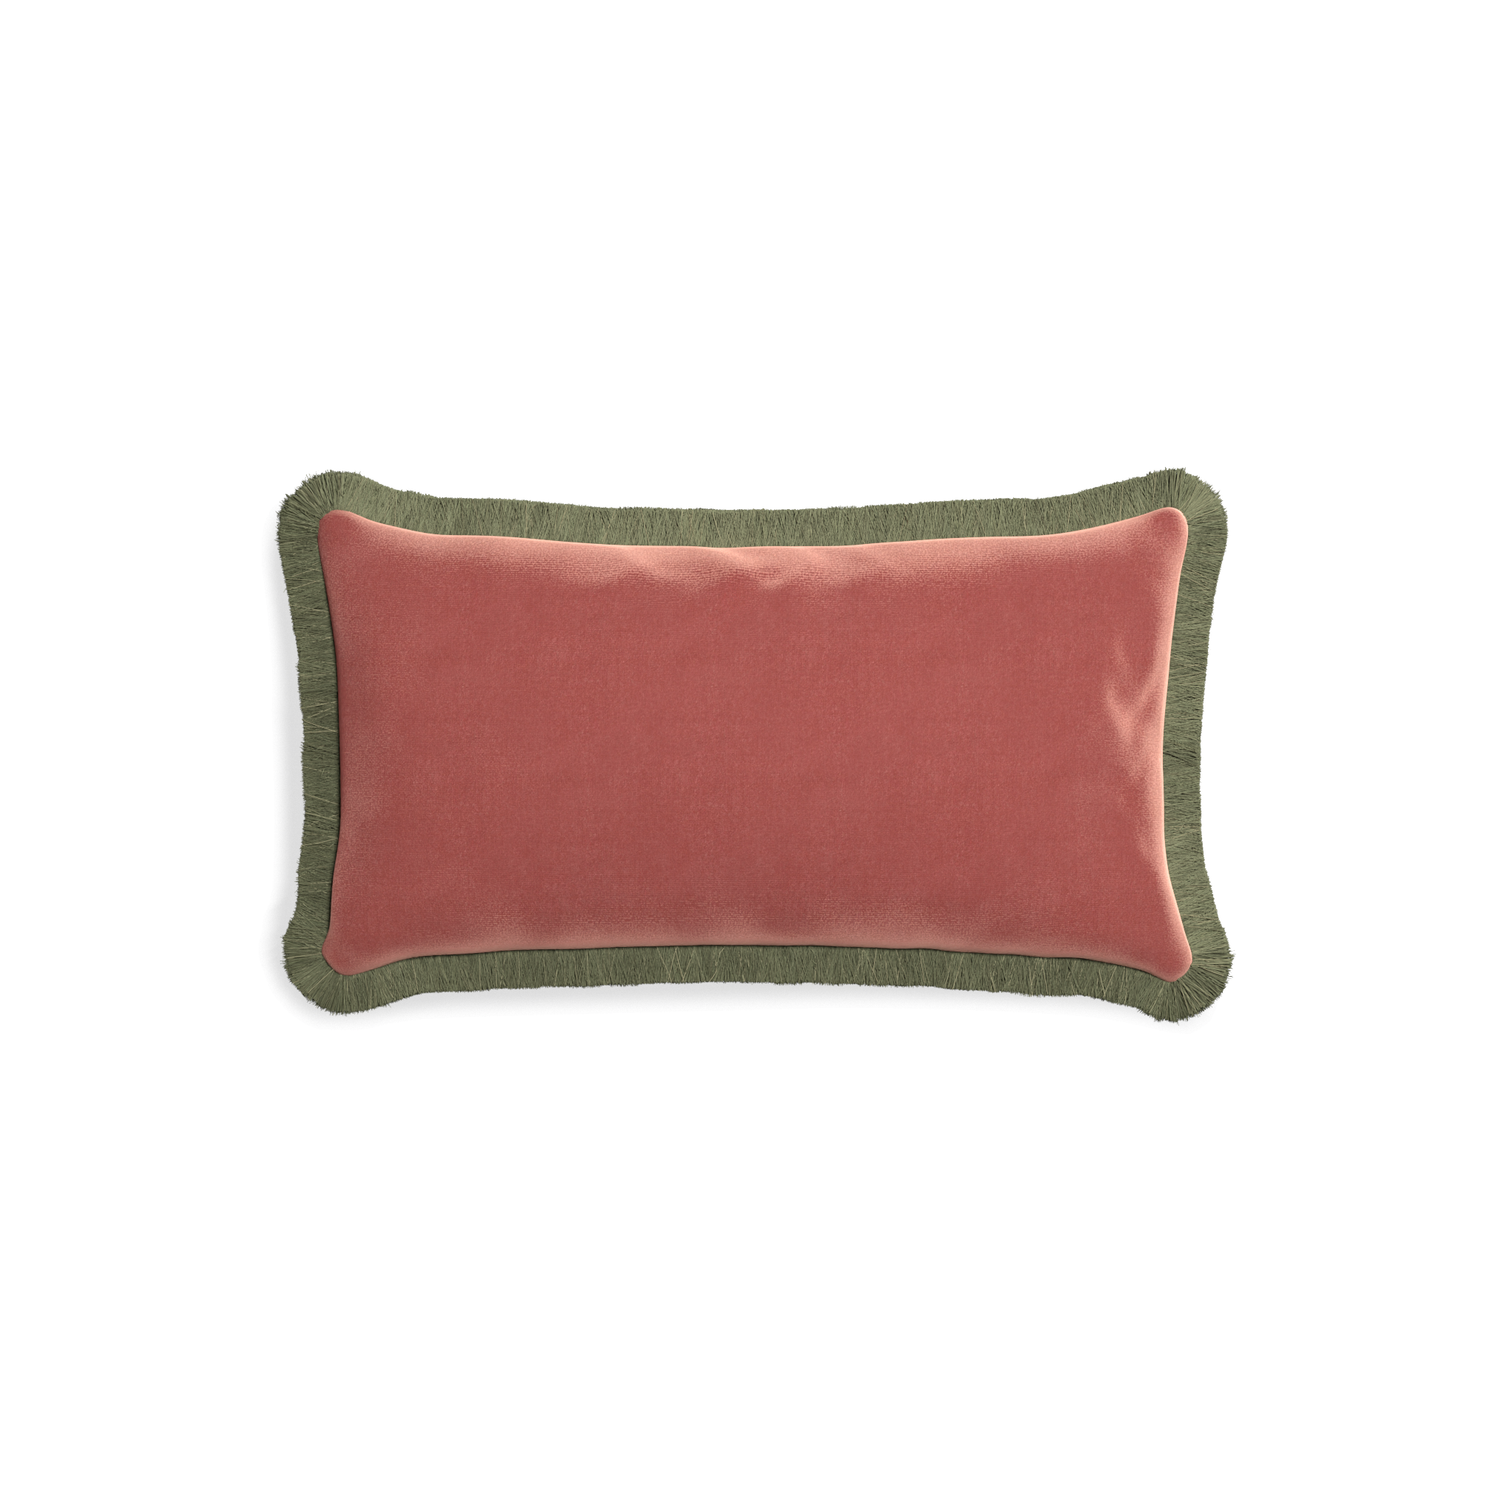 rectangle coral velvet pillow with sage green fringe